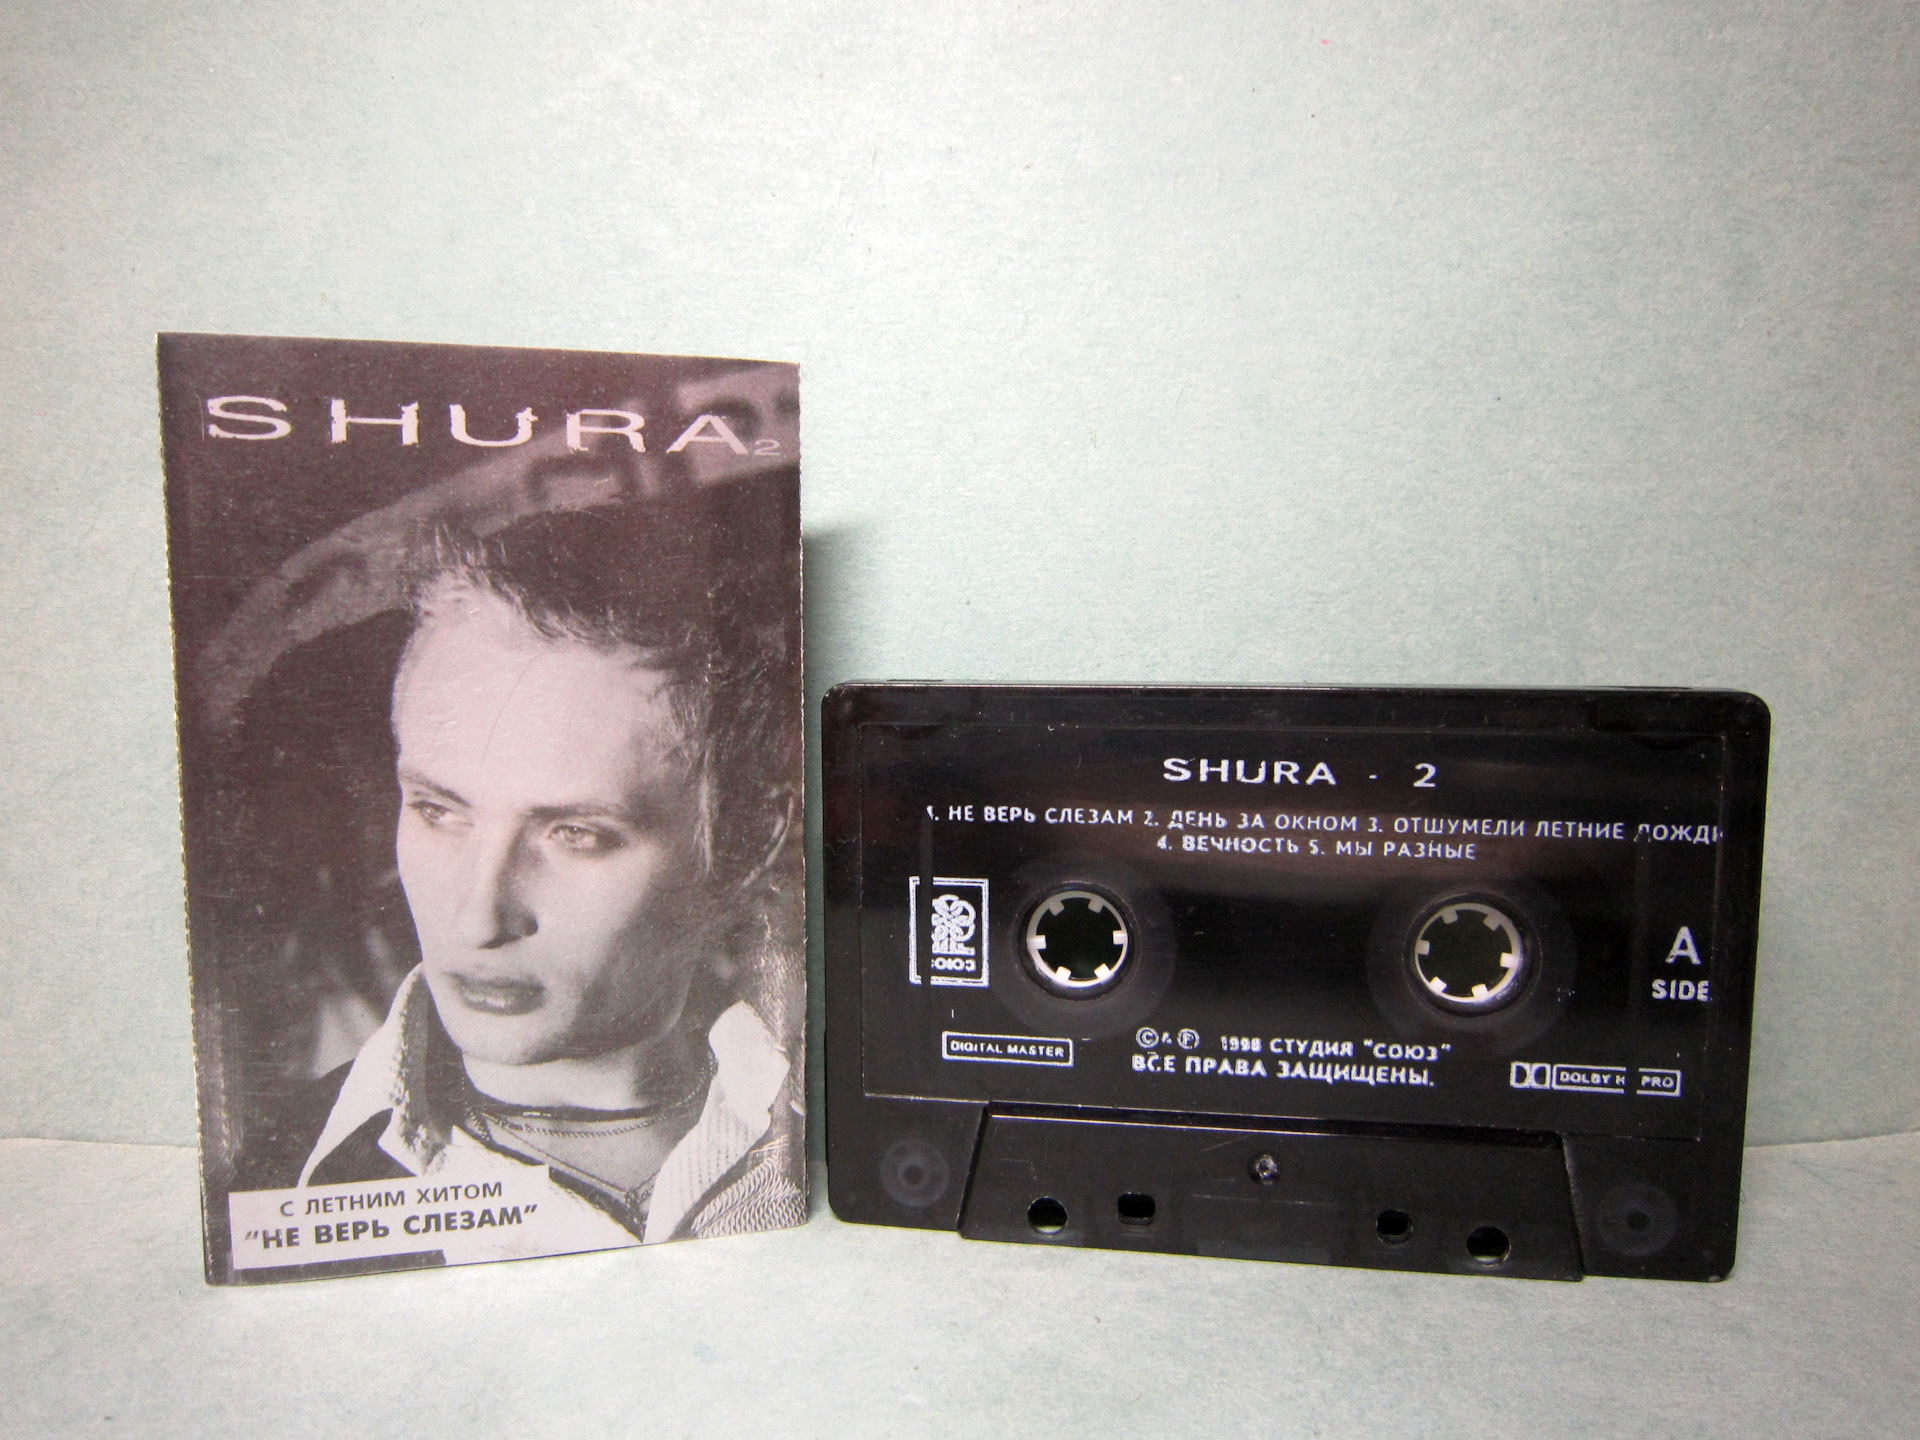 Ты не верь слезам шура текст песни. Shura 2 Шура кассета. Аудиокассеты Шура. Обложка аудиокассеты Шура. Первая кассета Шуры.